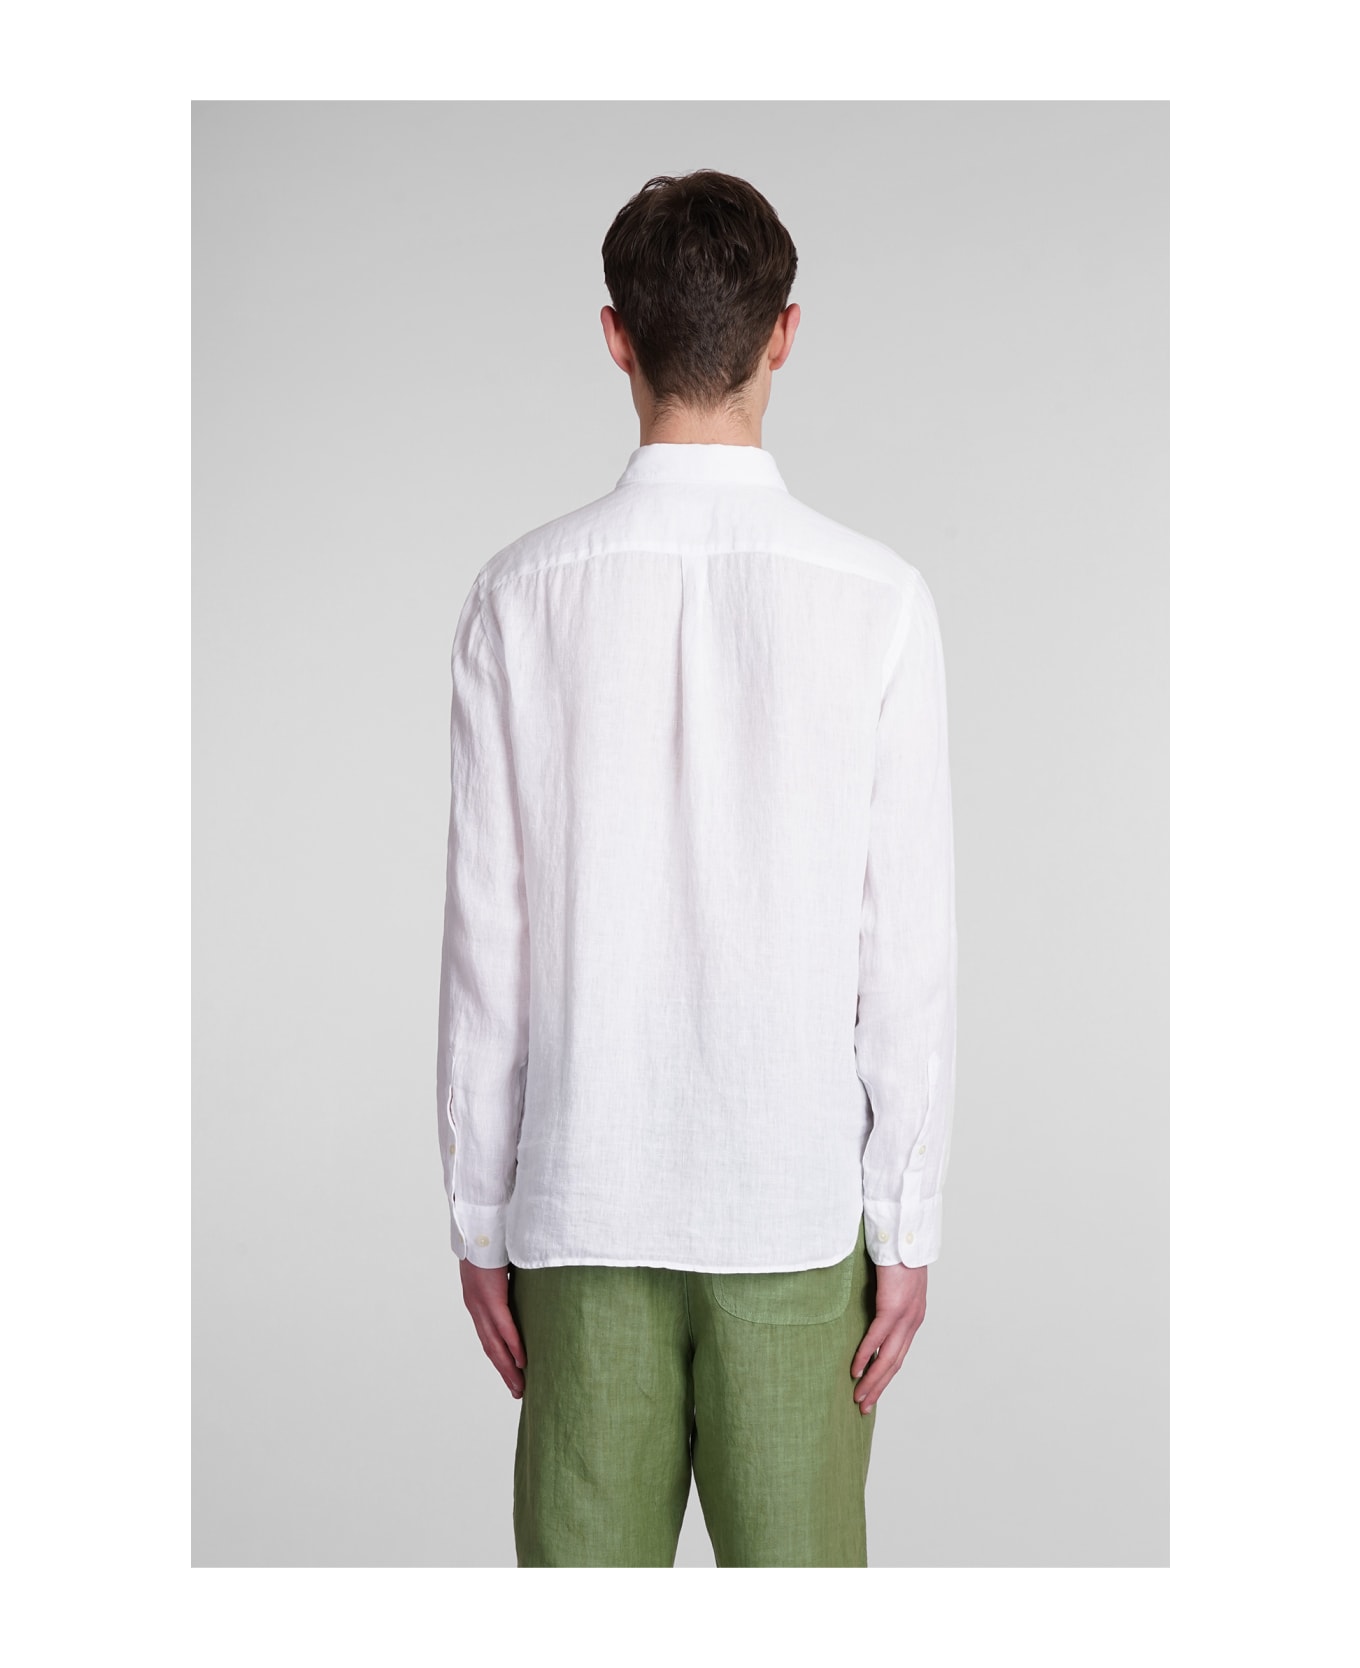 120% Lino Shirt In White Linen - white シャツ